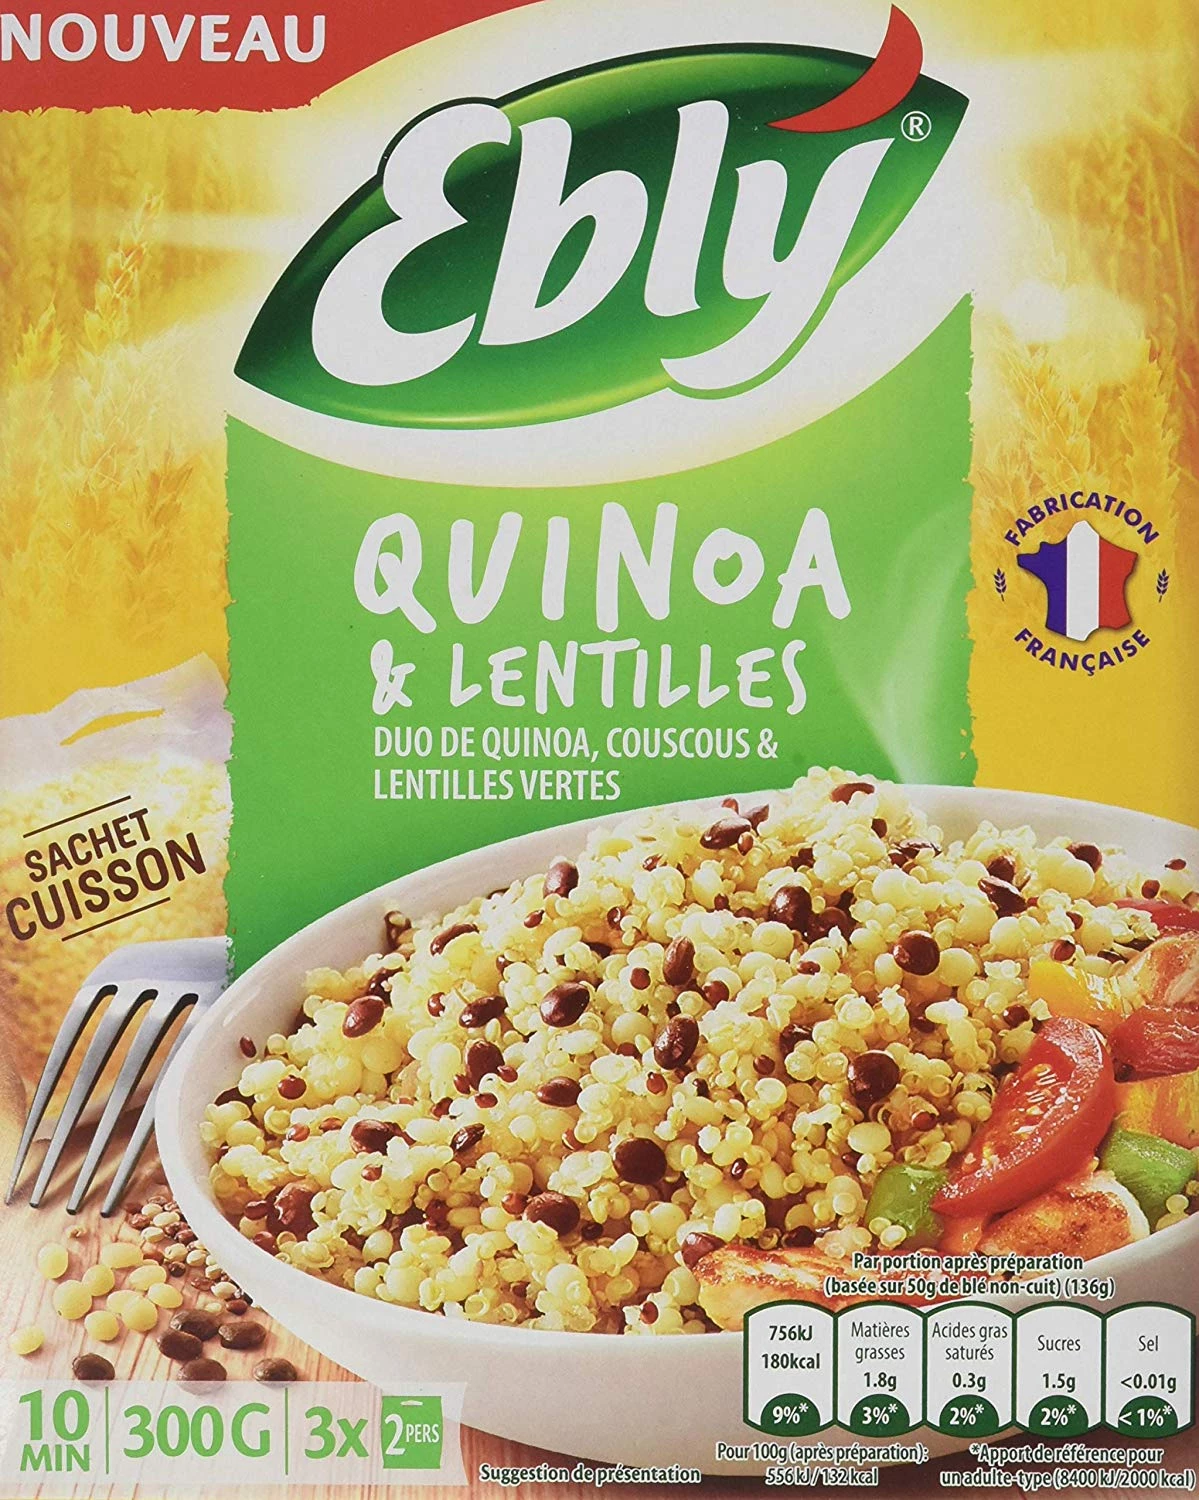 Quinoa & lentilles 300g - EBLY